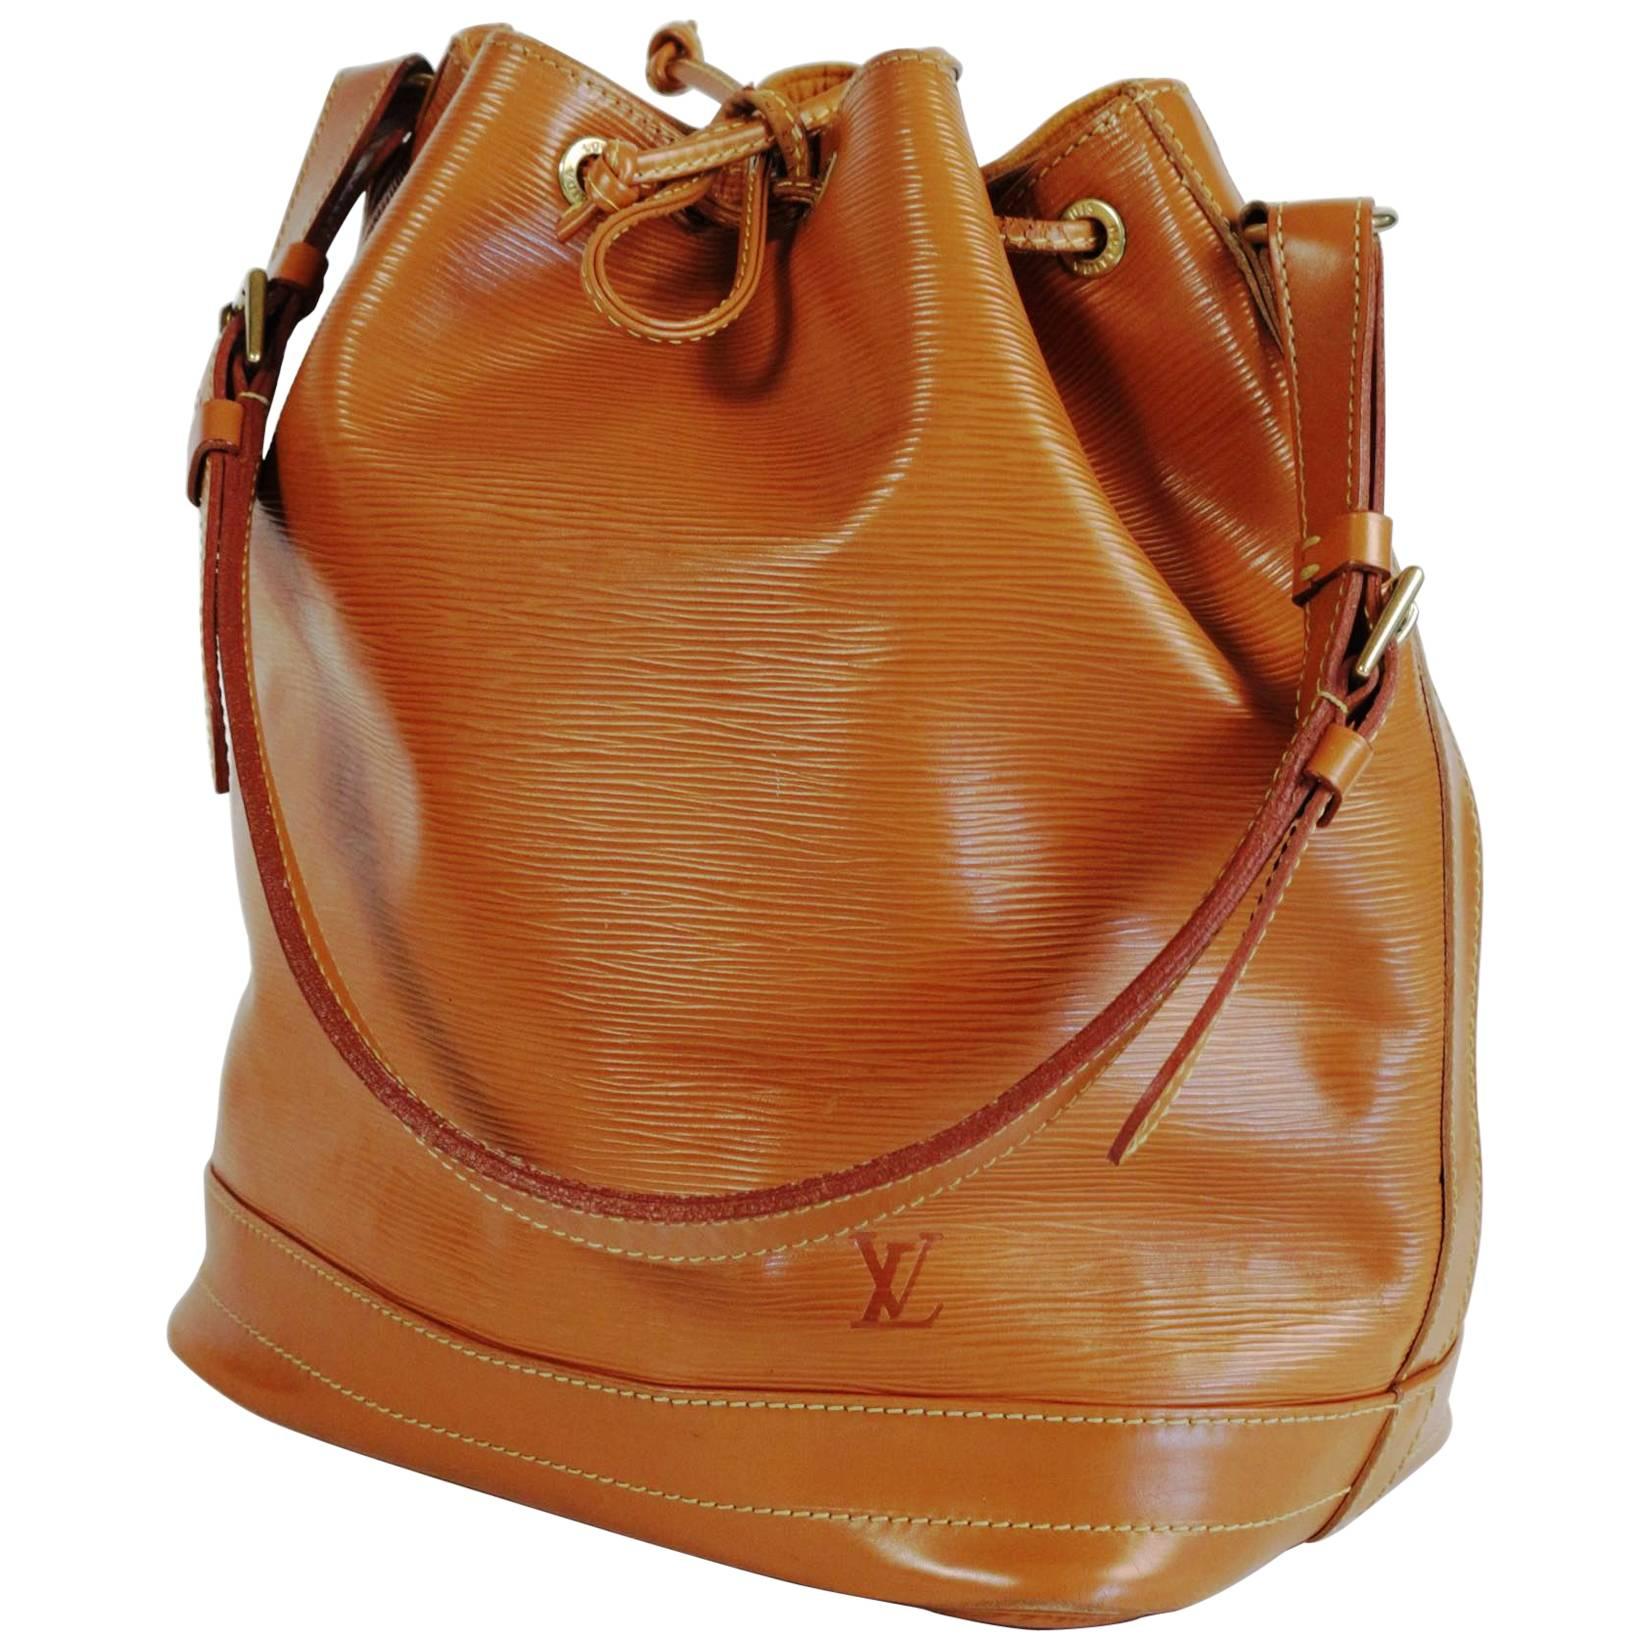 Vintage Louis Vuitton Grand Noe Bag, Epi Leather, Natural Leather Color